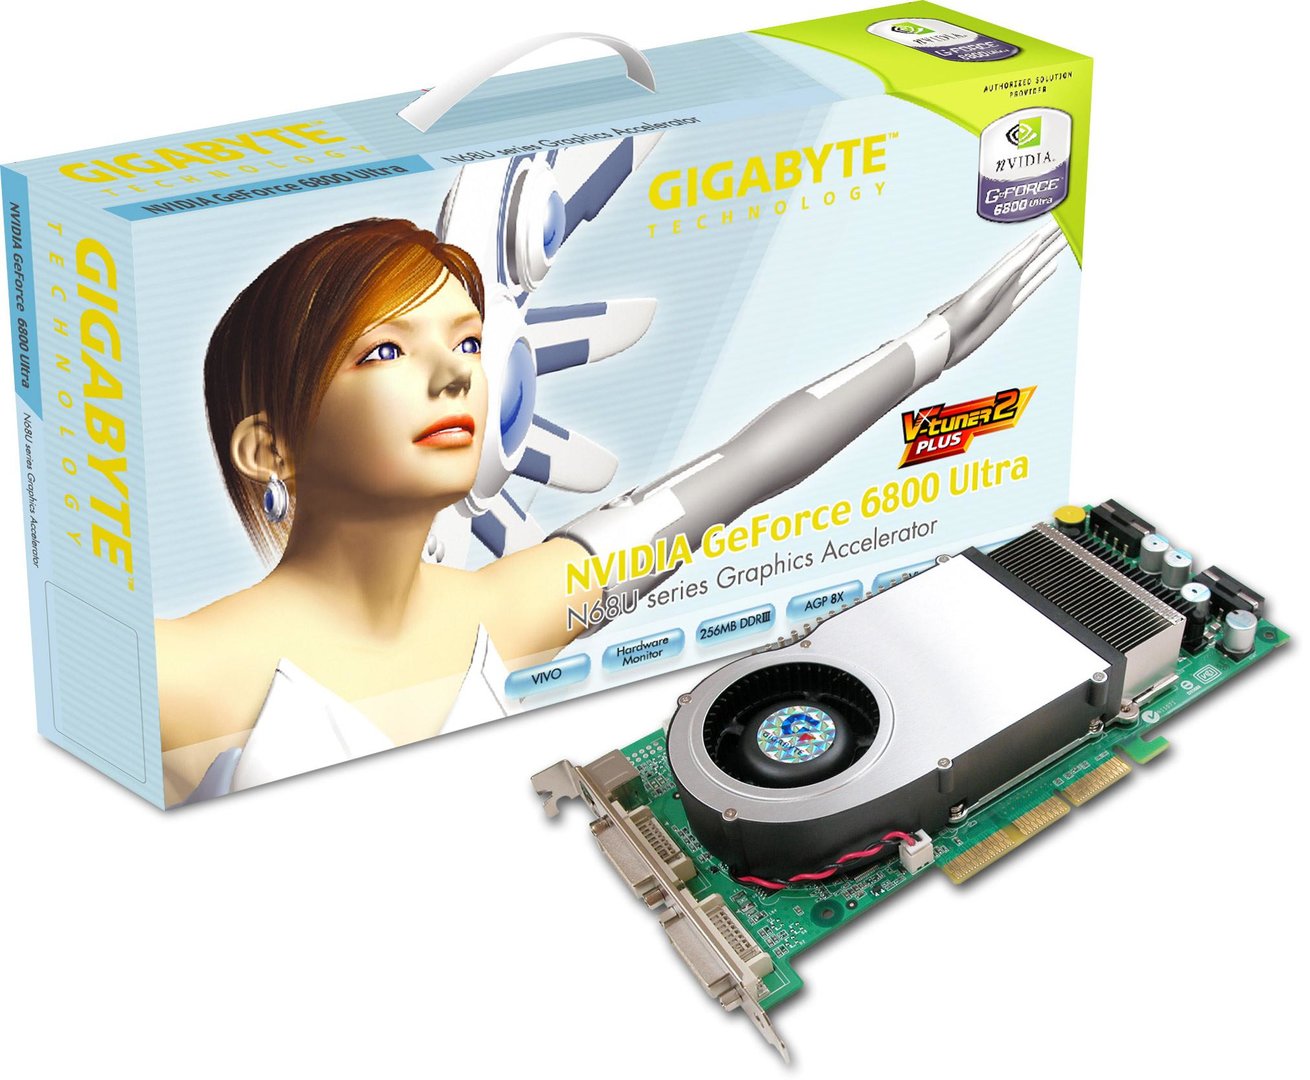 Gigabyte GeForce 6800 Ultra